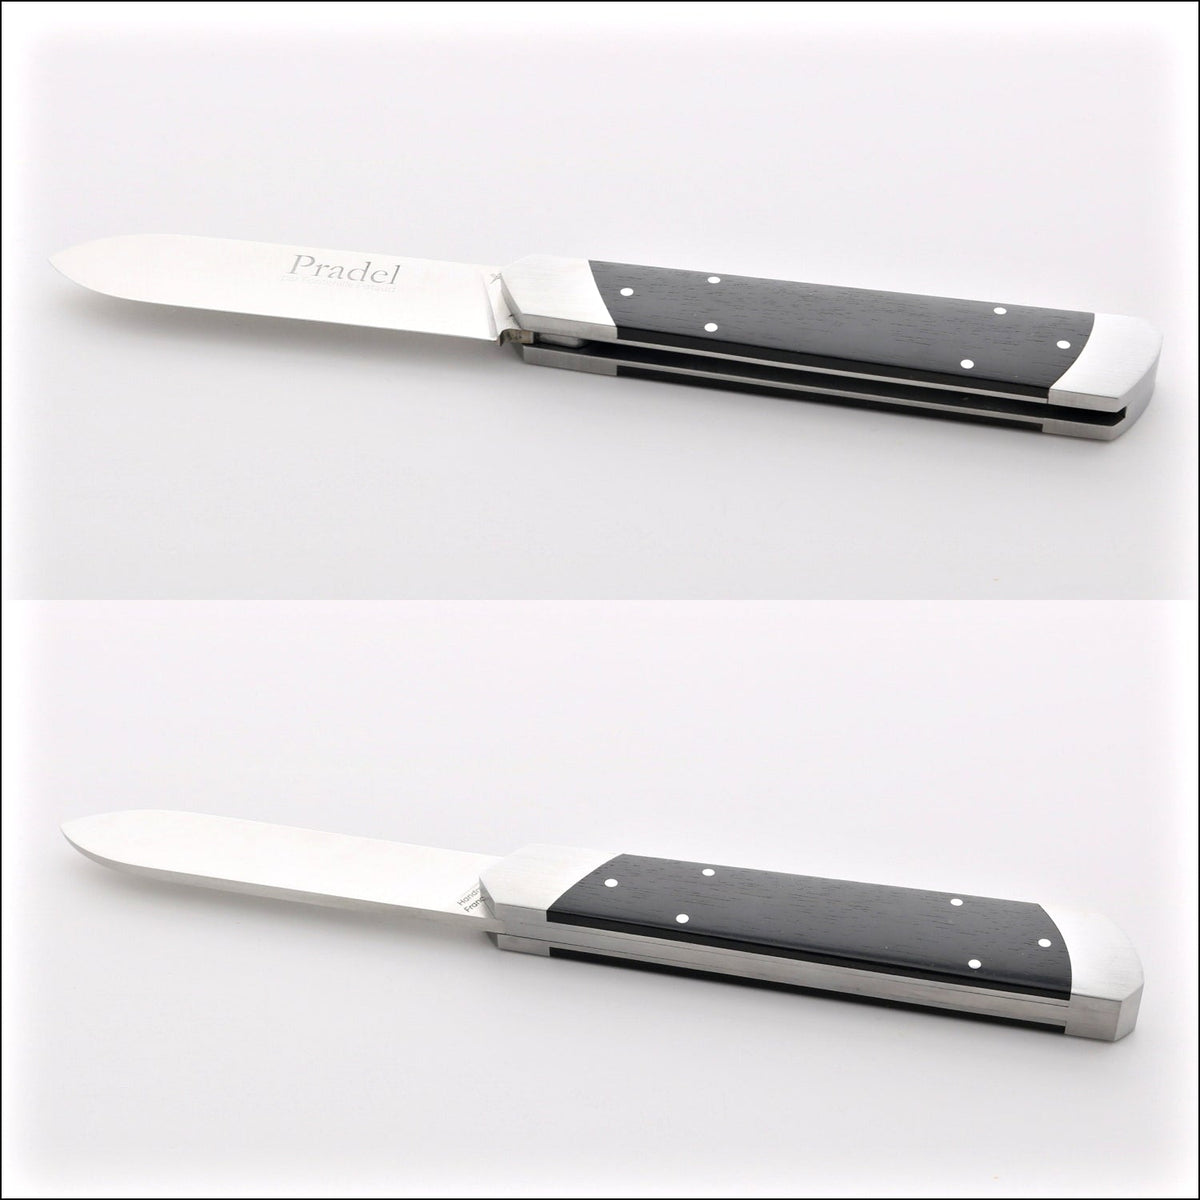 Pradel Folding Knife Ebony Handle &amp; Lock-Back by Fontenille Pataud